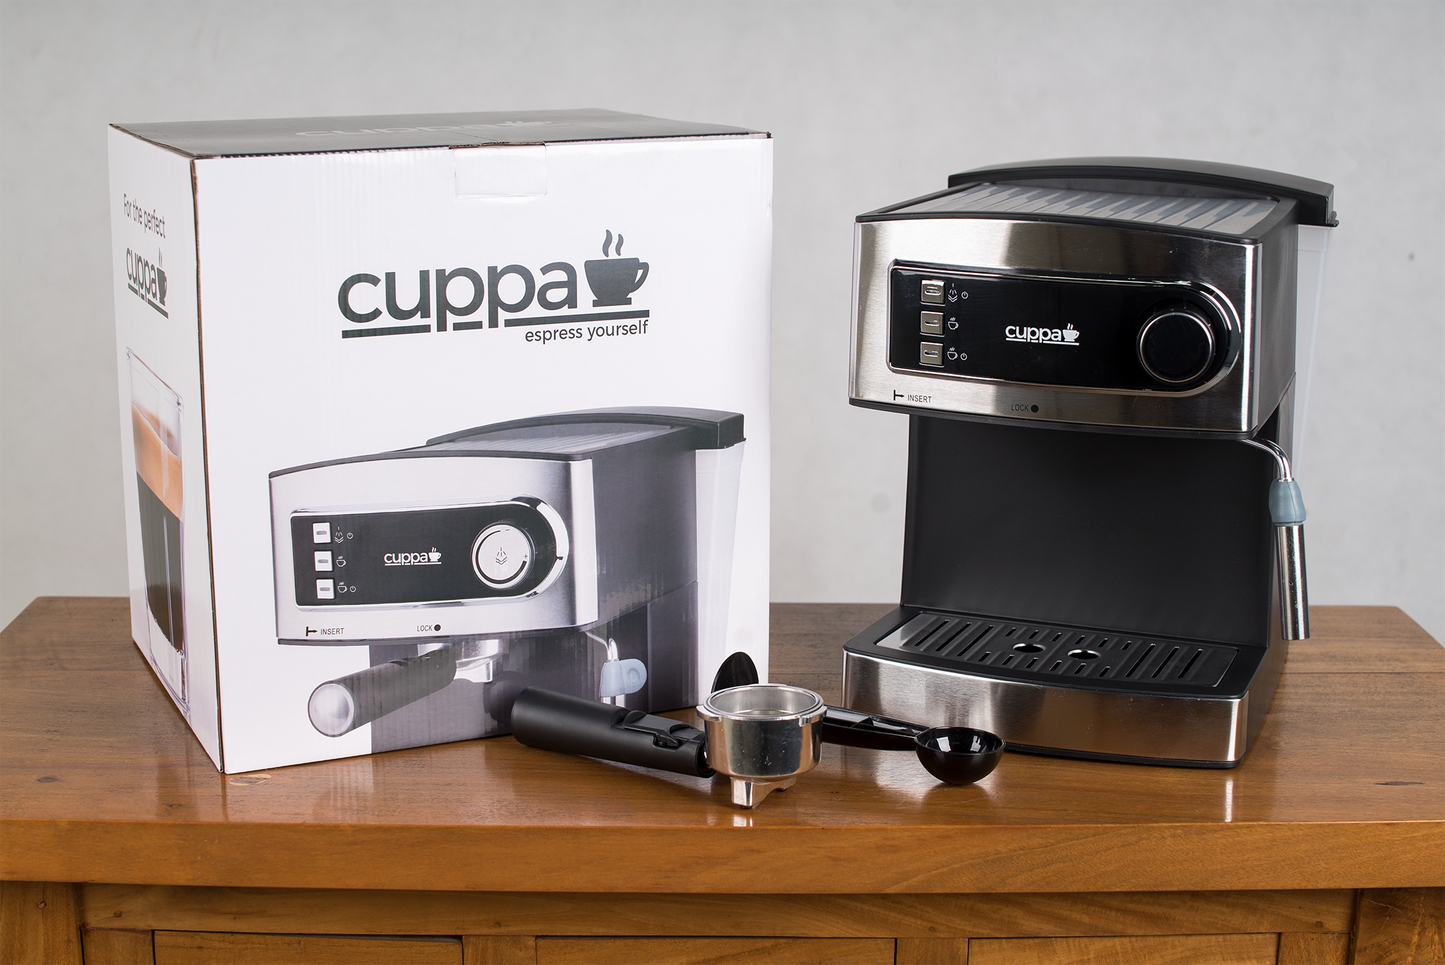 Cuppa Espresso machine box with machine